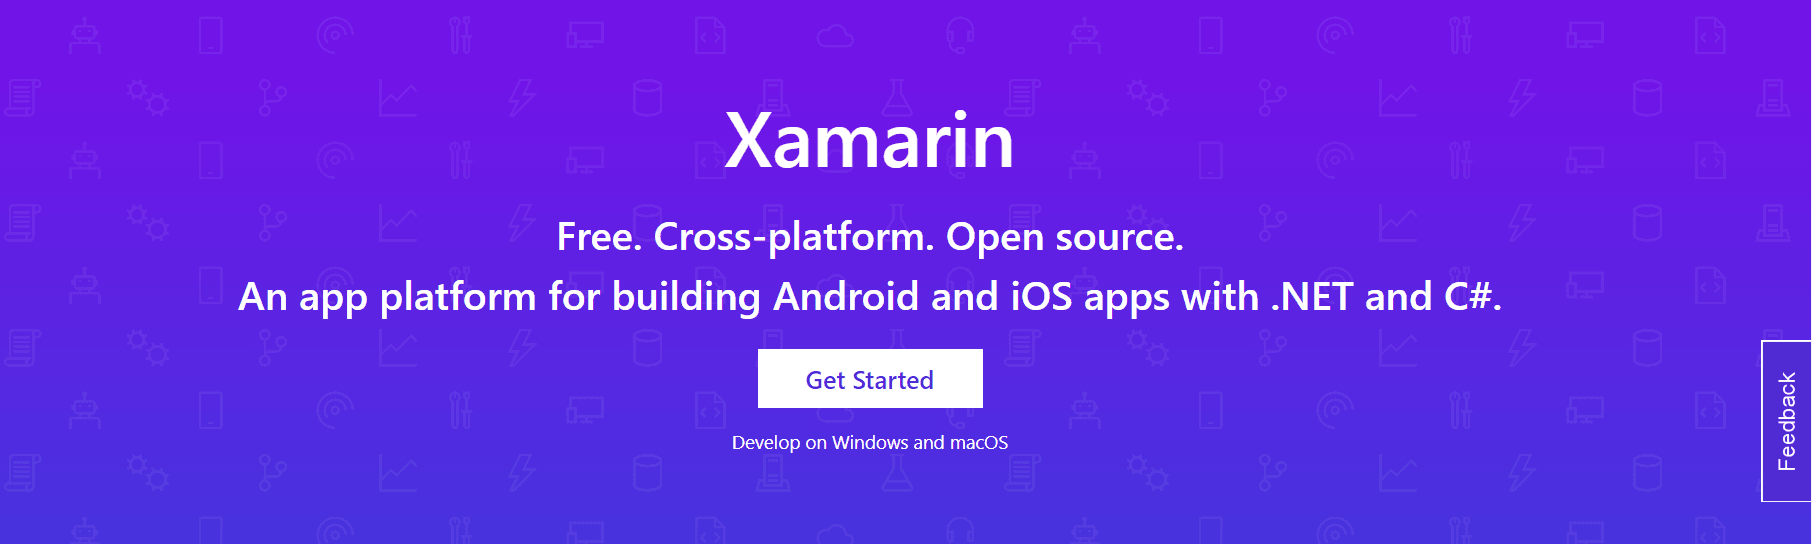 creare app cross-platform - xamarin